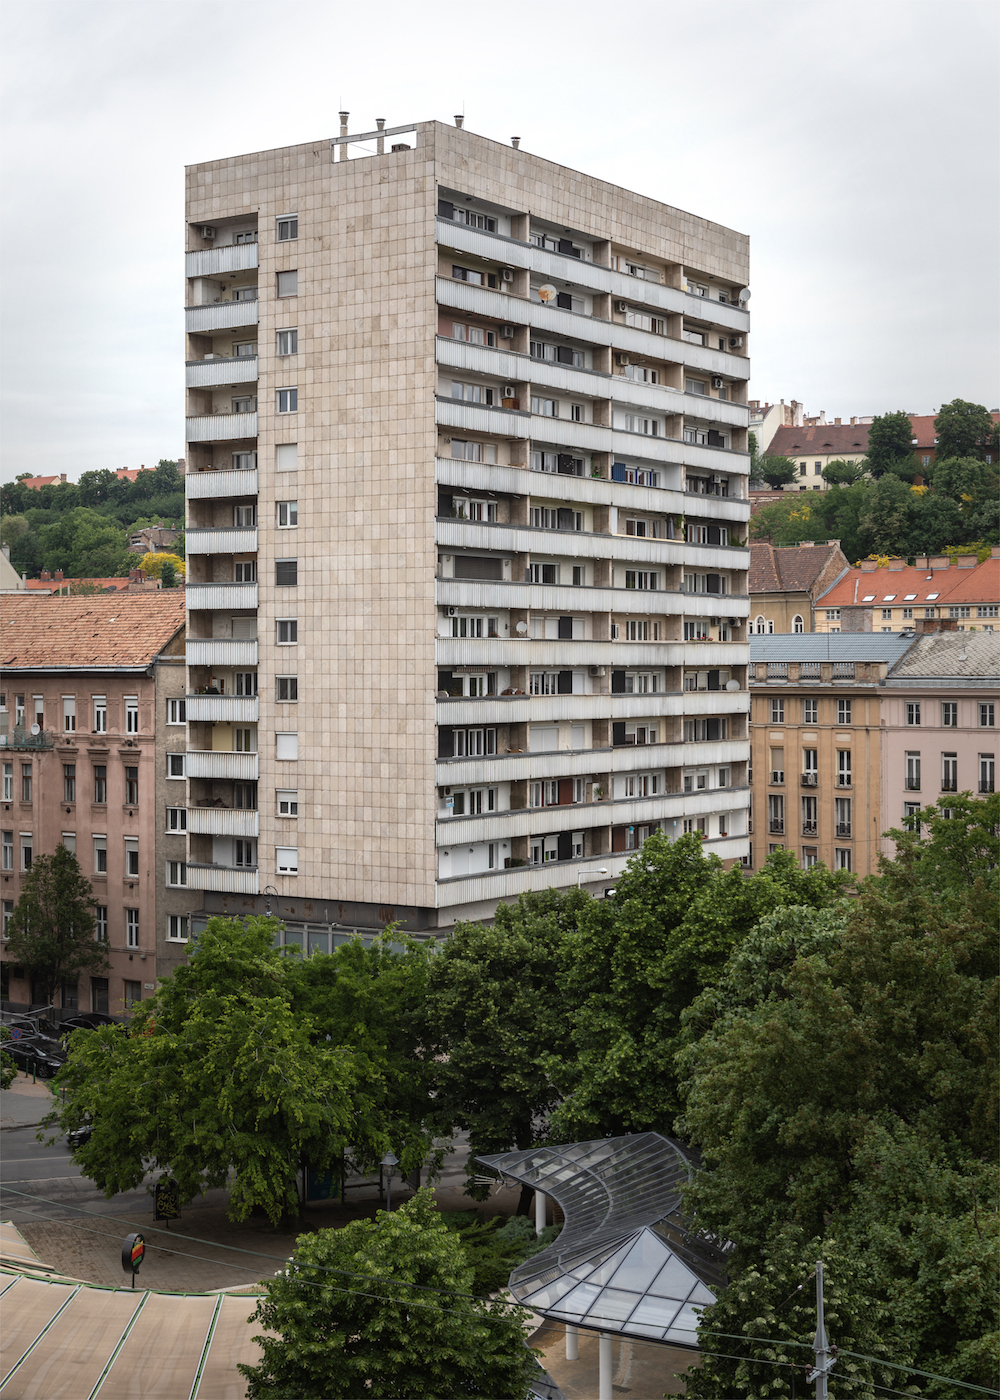 OTP Apartment Tower by Zoltán Boross (BUVÁTI)